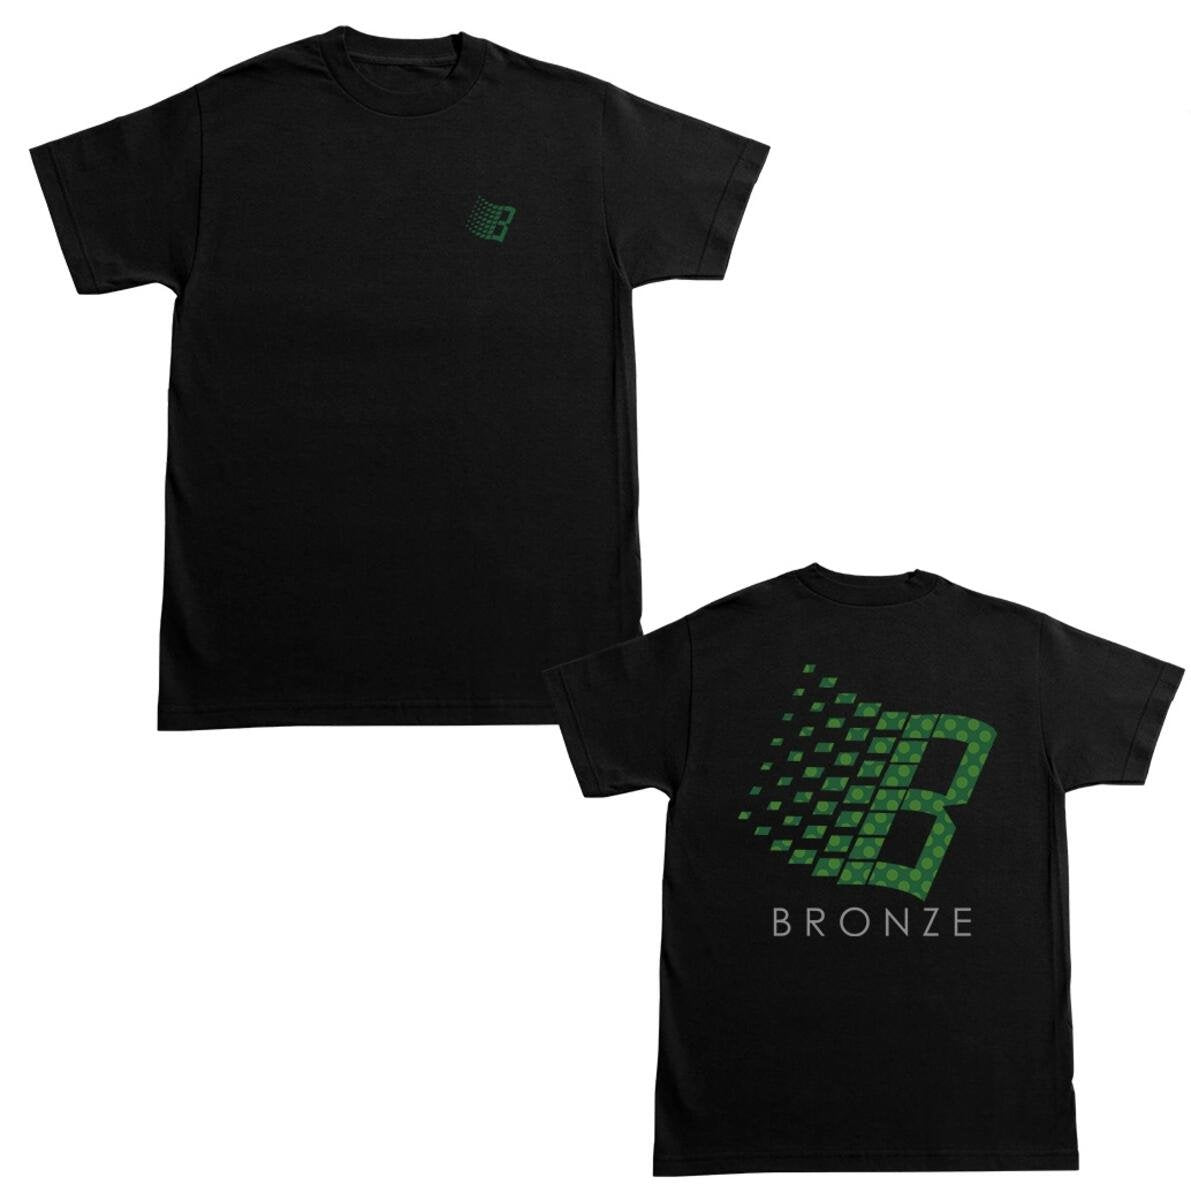 Bronze - Polka Dot Tshirt Black